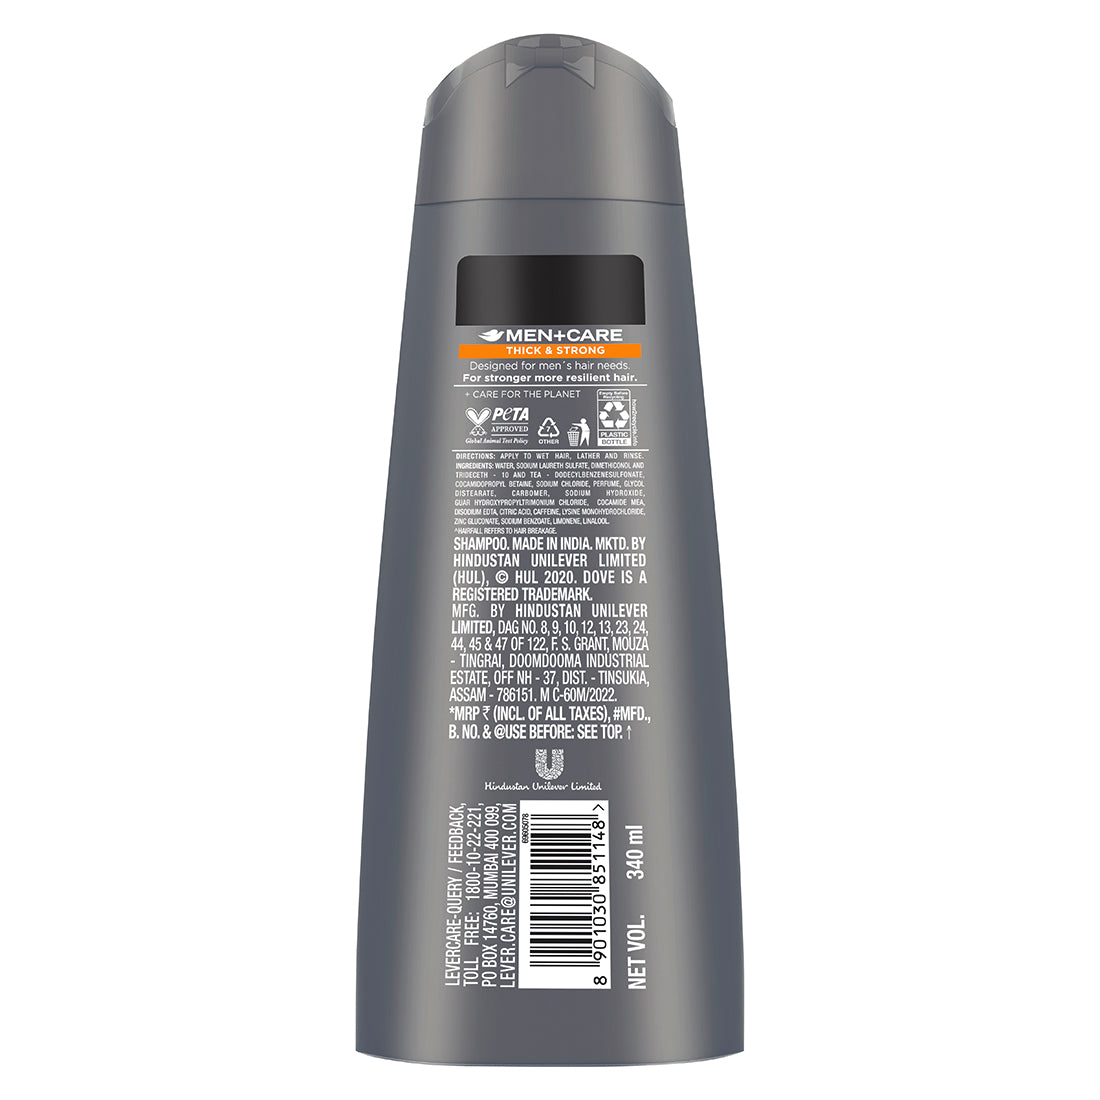 Dove Men+Care 2in1 Shampoo+Conditioner Combo, 340ml (Pack of 3)